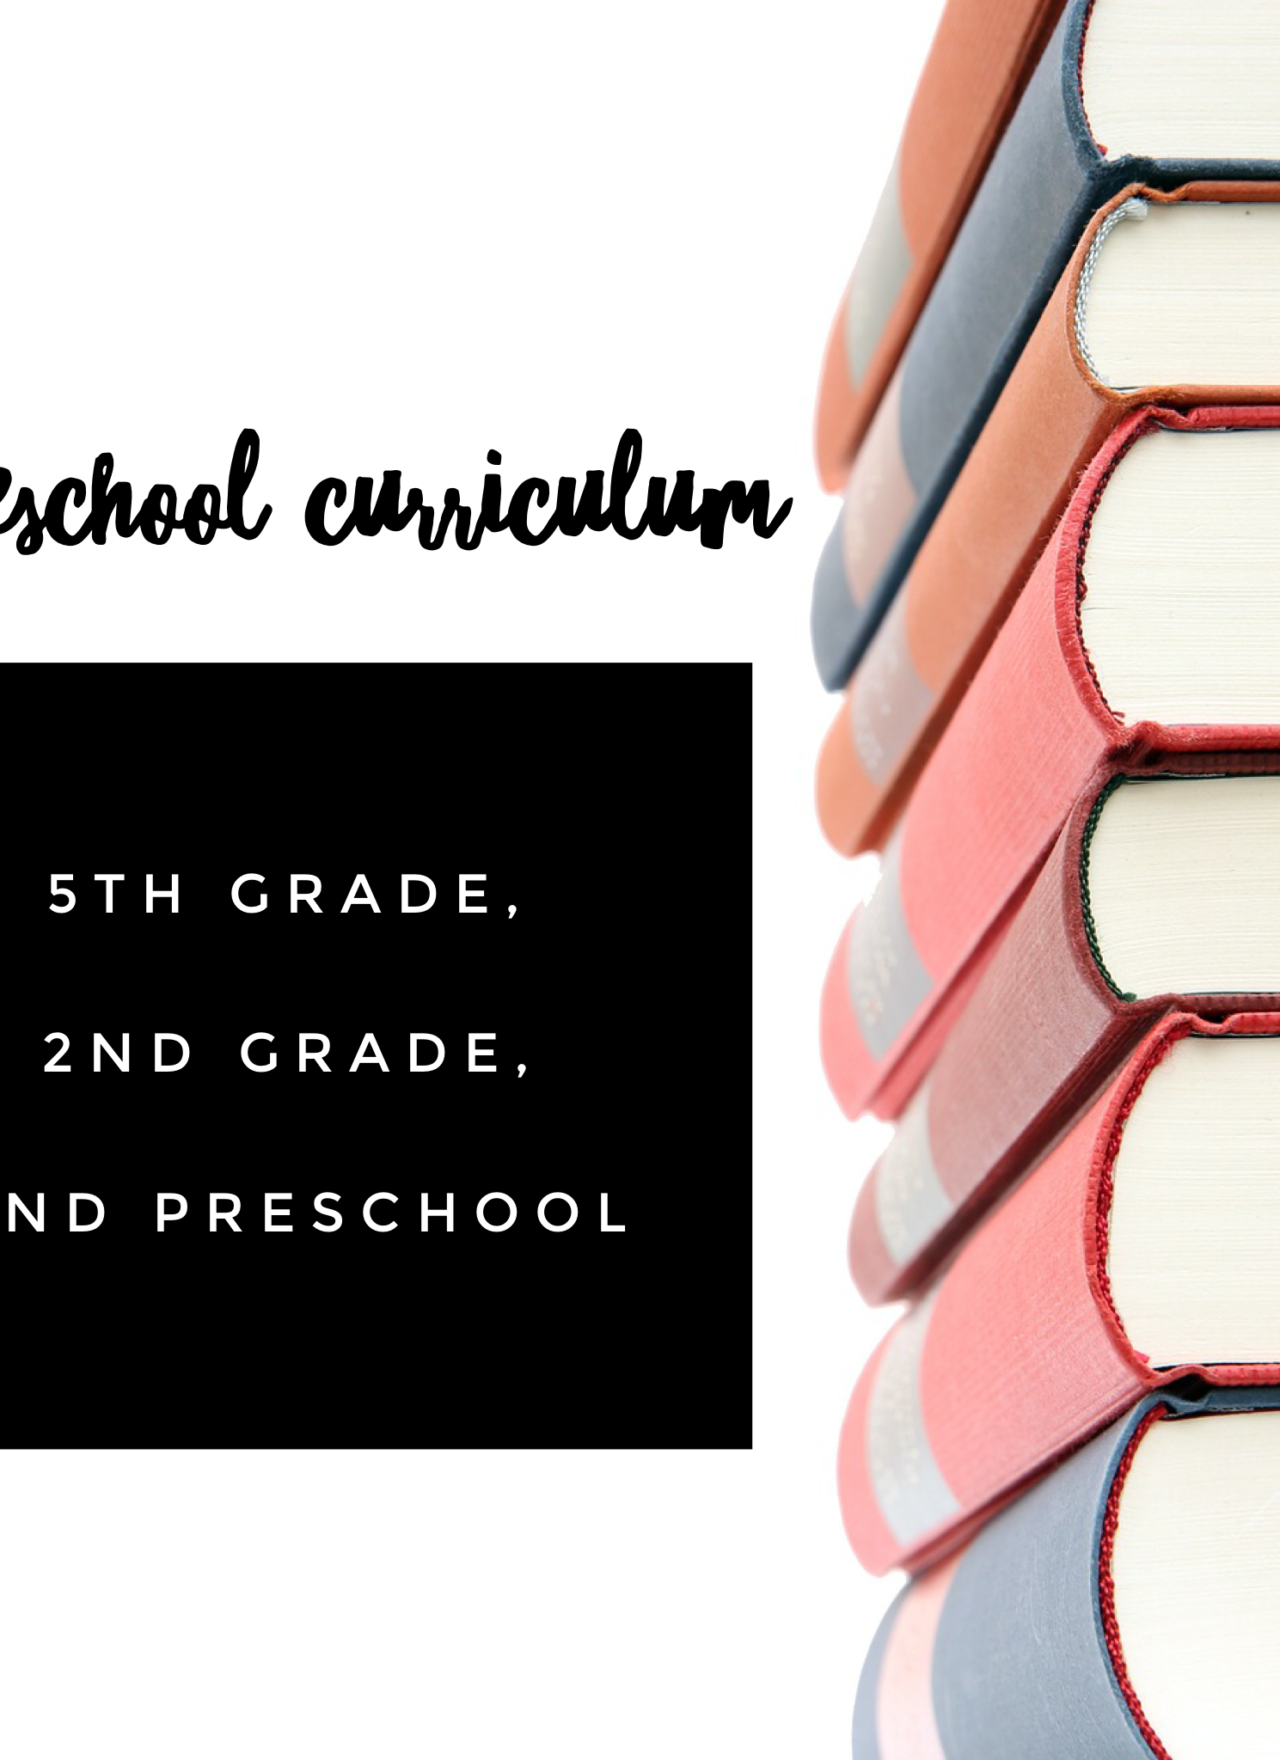 Our 2016/2017 Homeschool Curriculum Choice